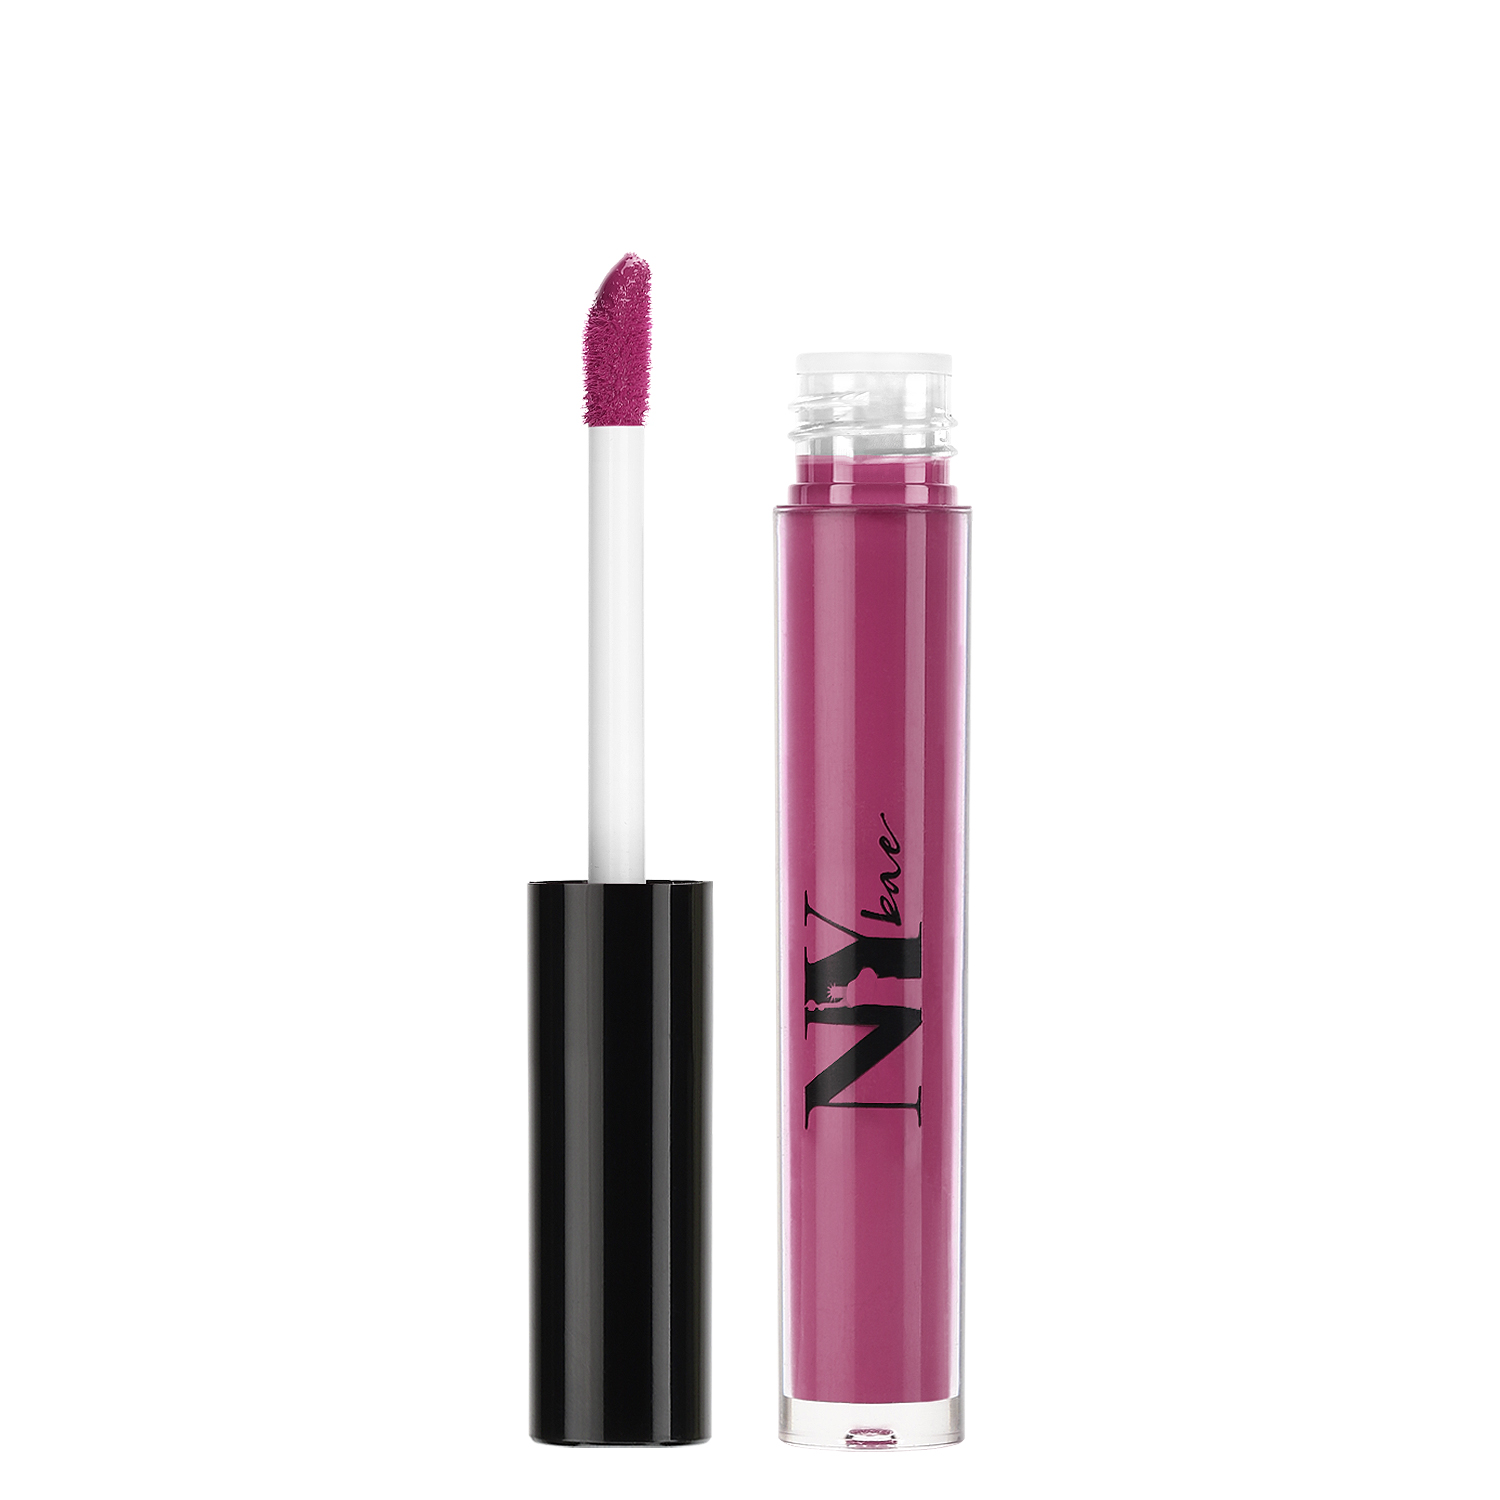 NY Bae moisturising liquid lipsticks-Samantha's Fantasy 44